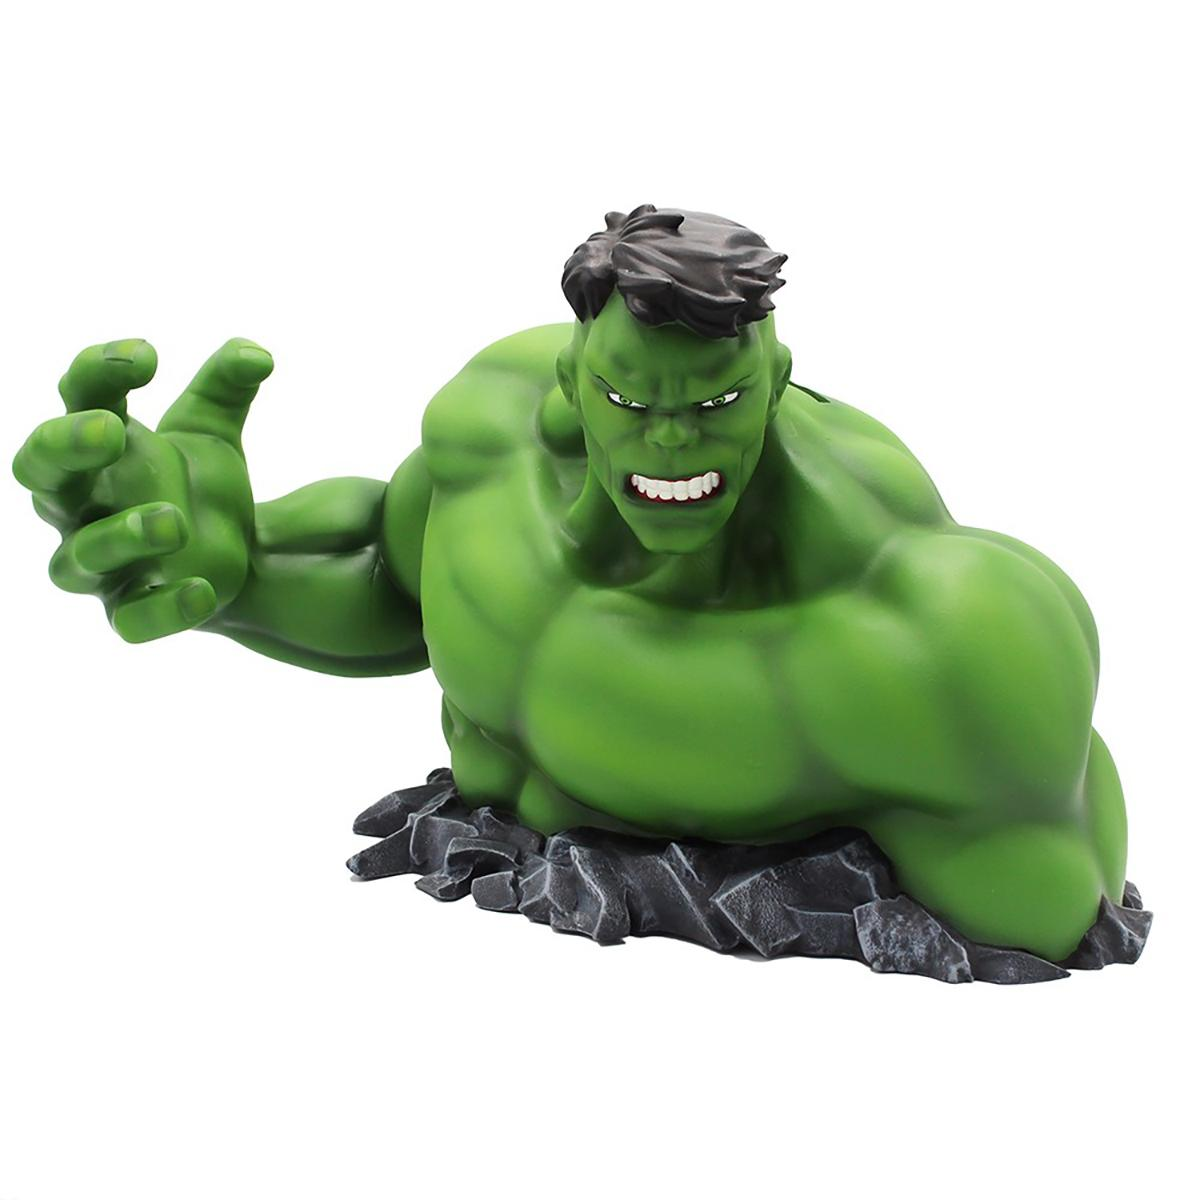 SEMIC DISTRIBUTION Marvel Avengers Spardose XXL Mega Hulk Bank Spardose